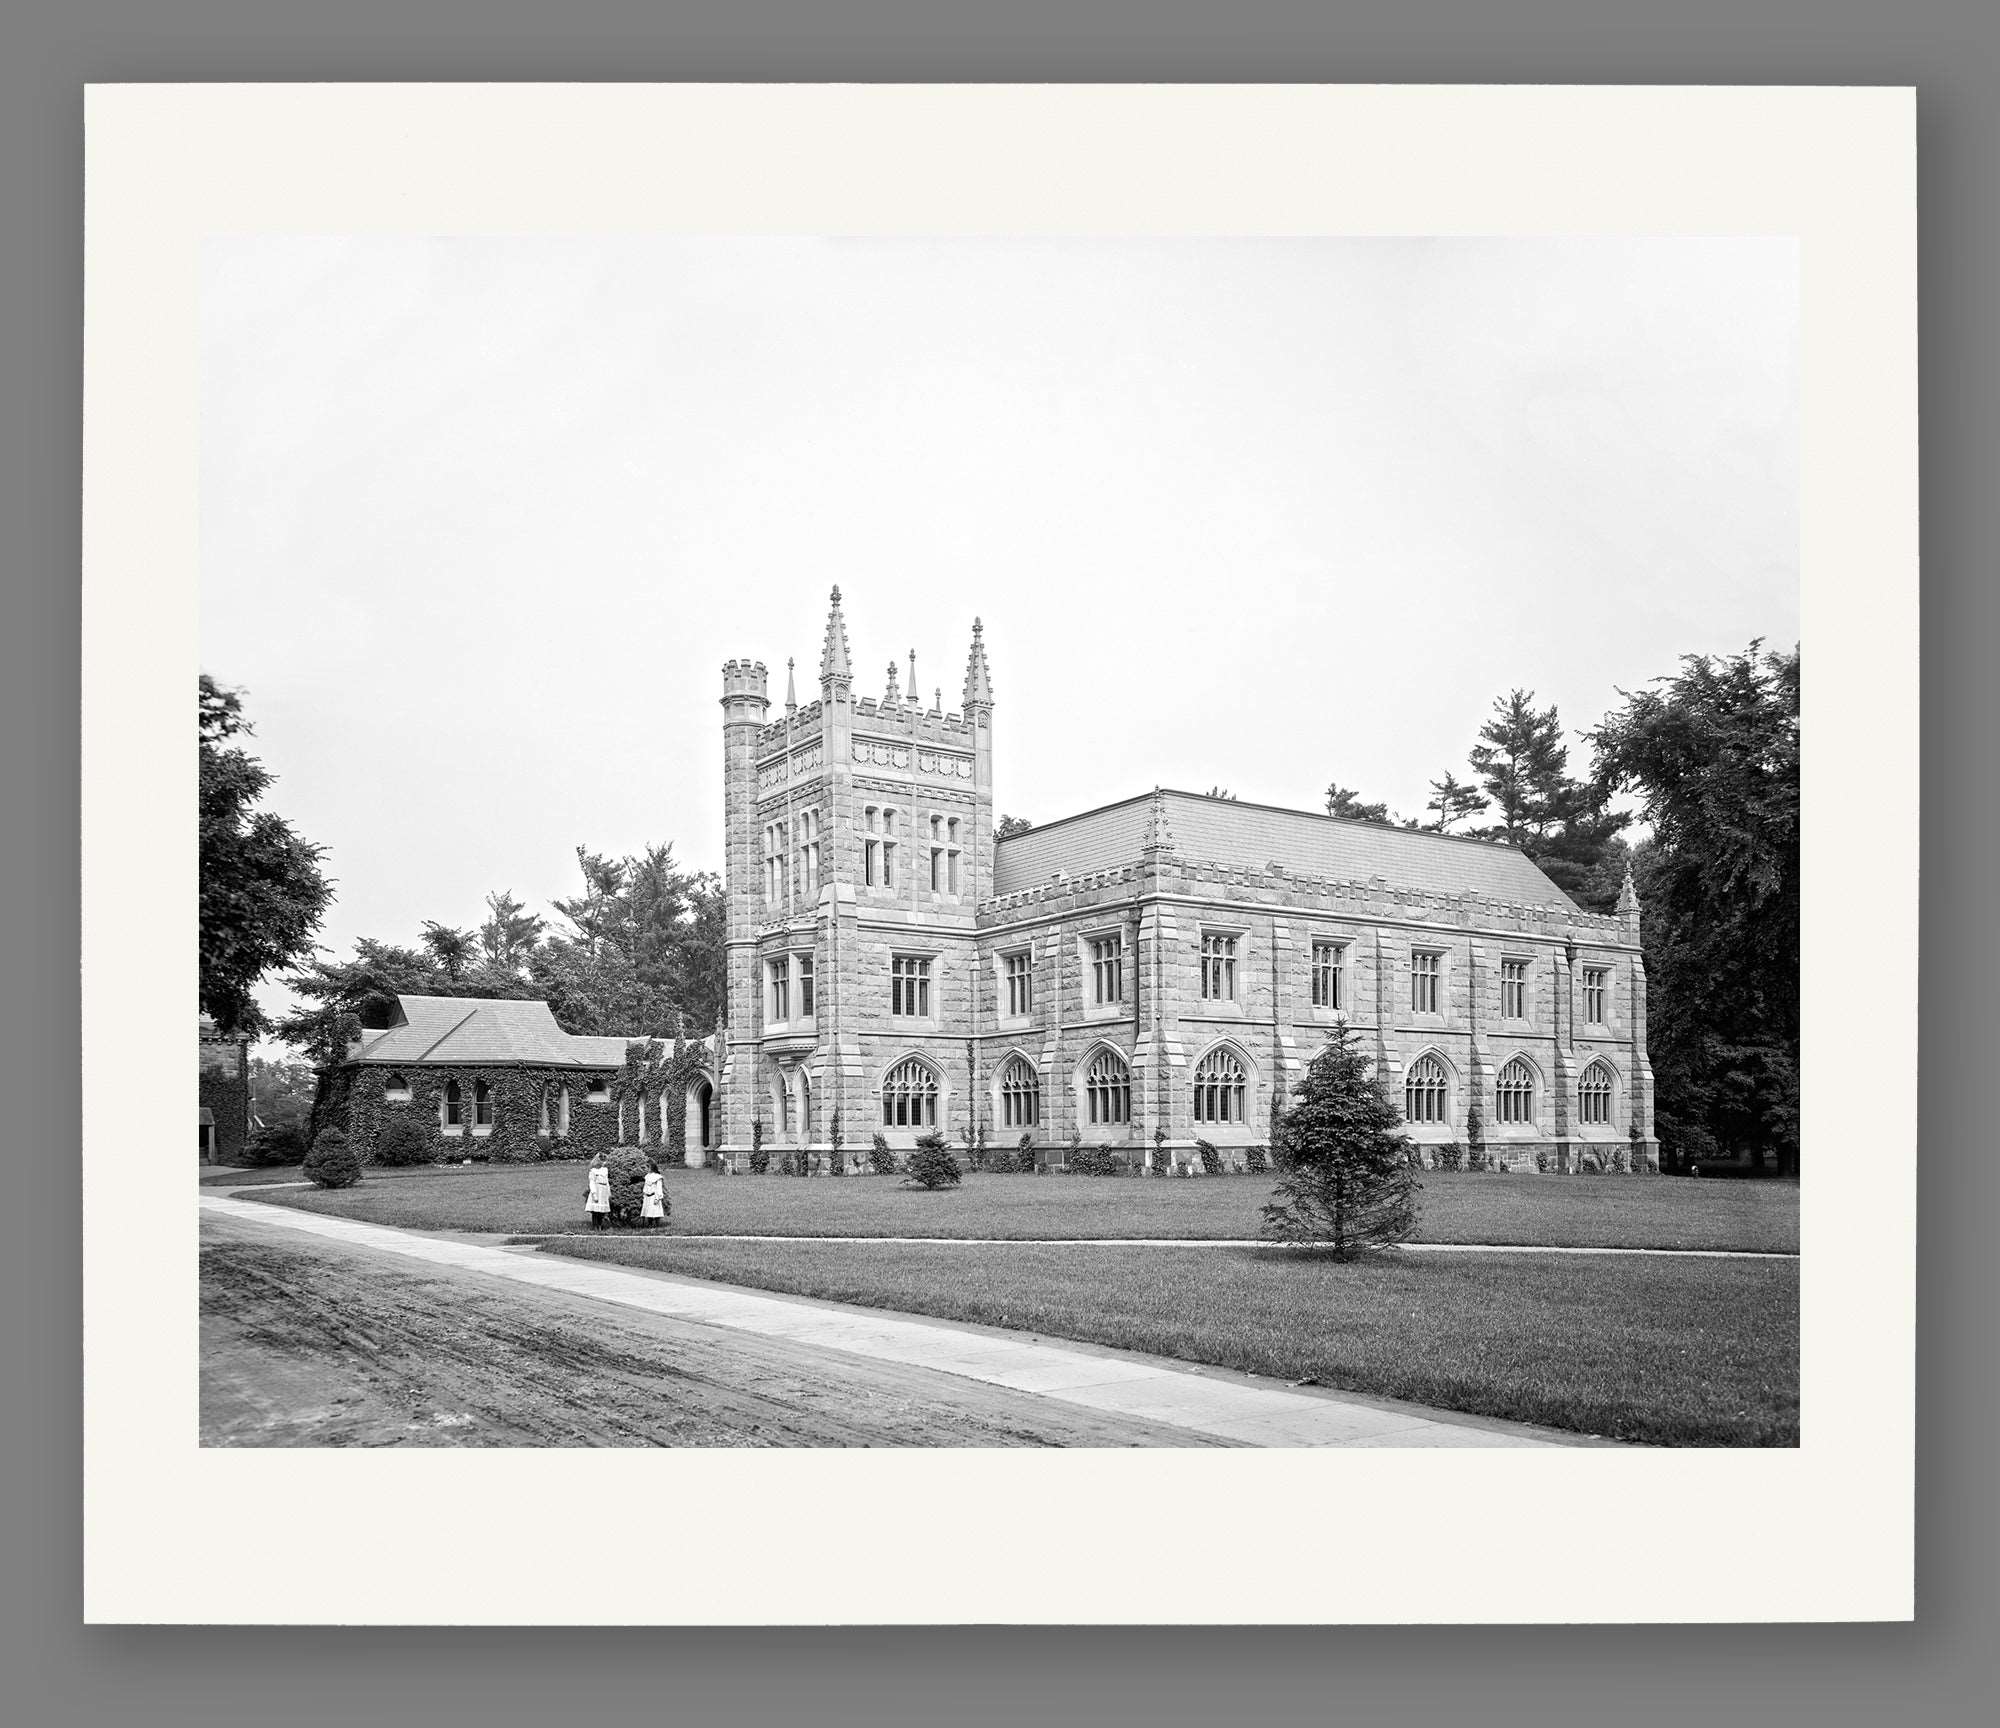 A fine art paper print of a vintage photograph of Princeton University